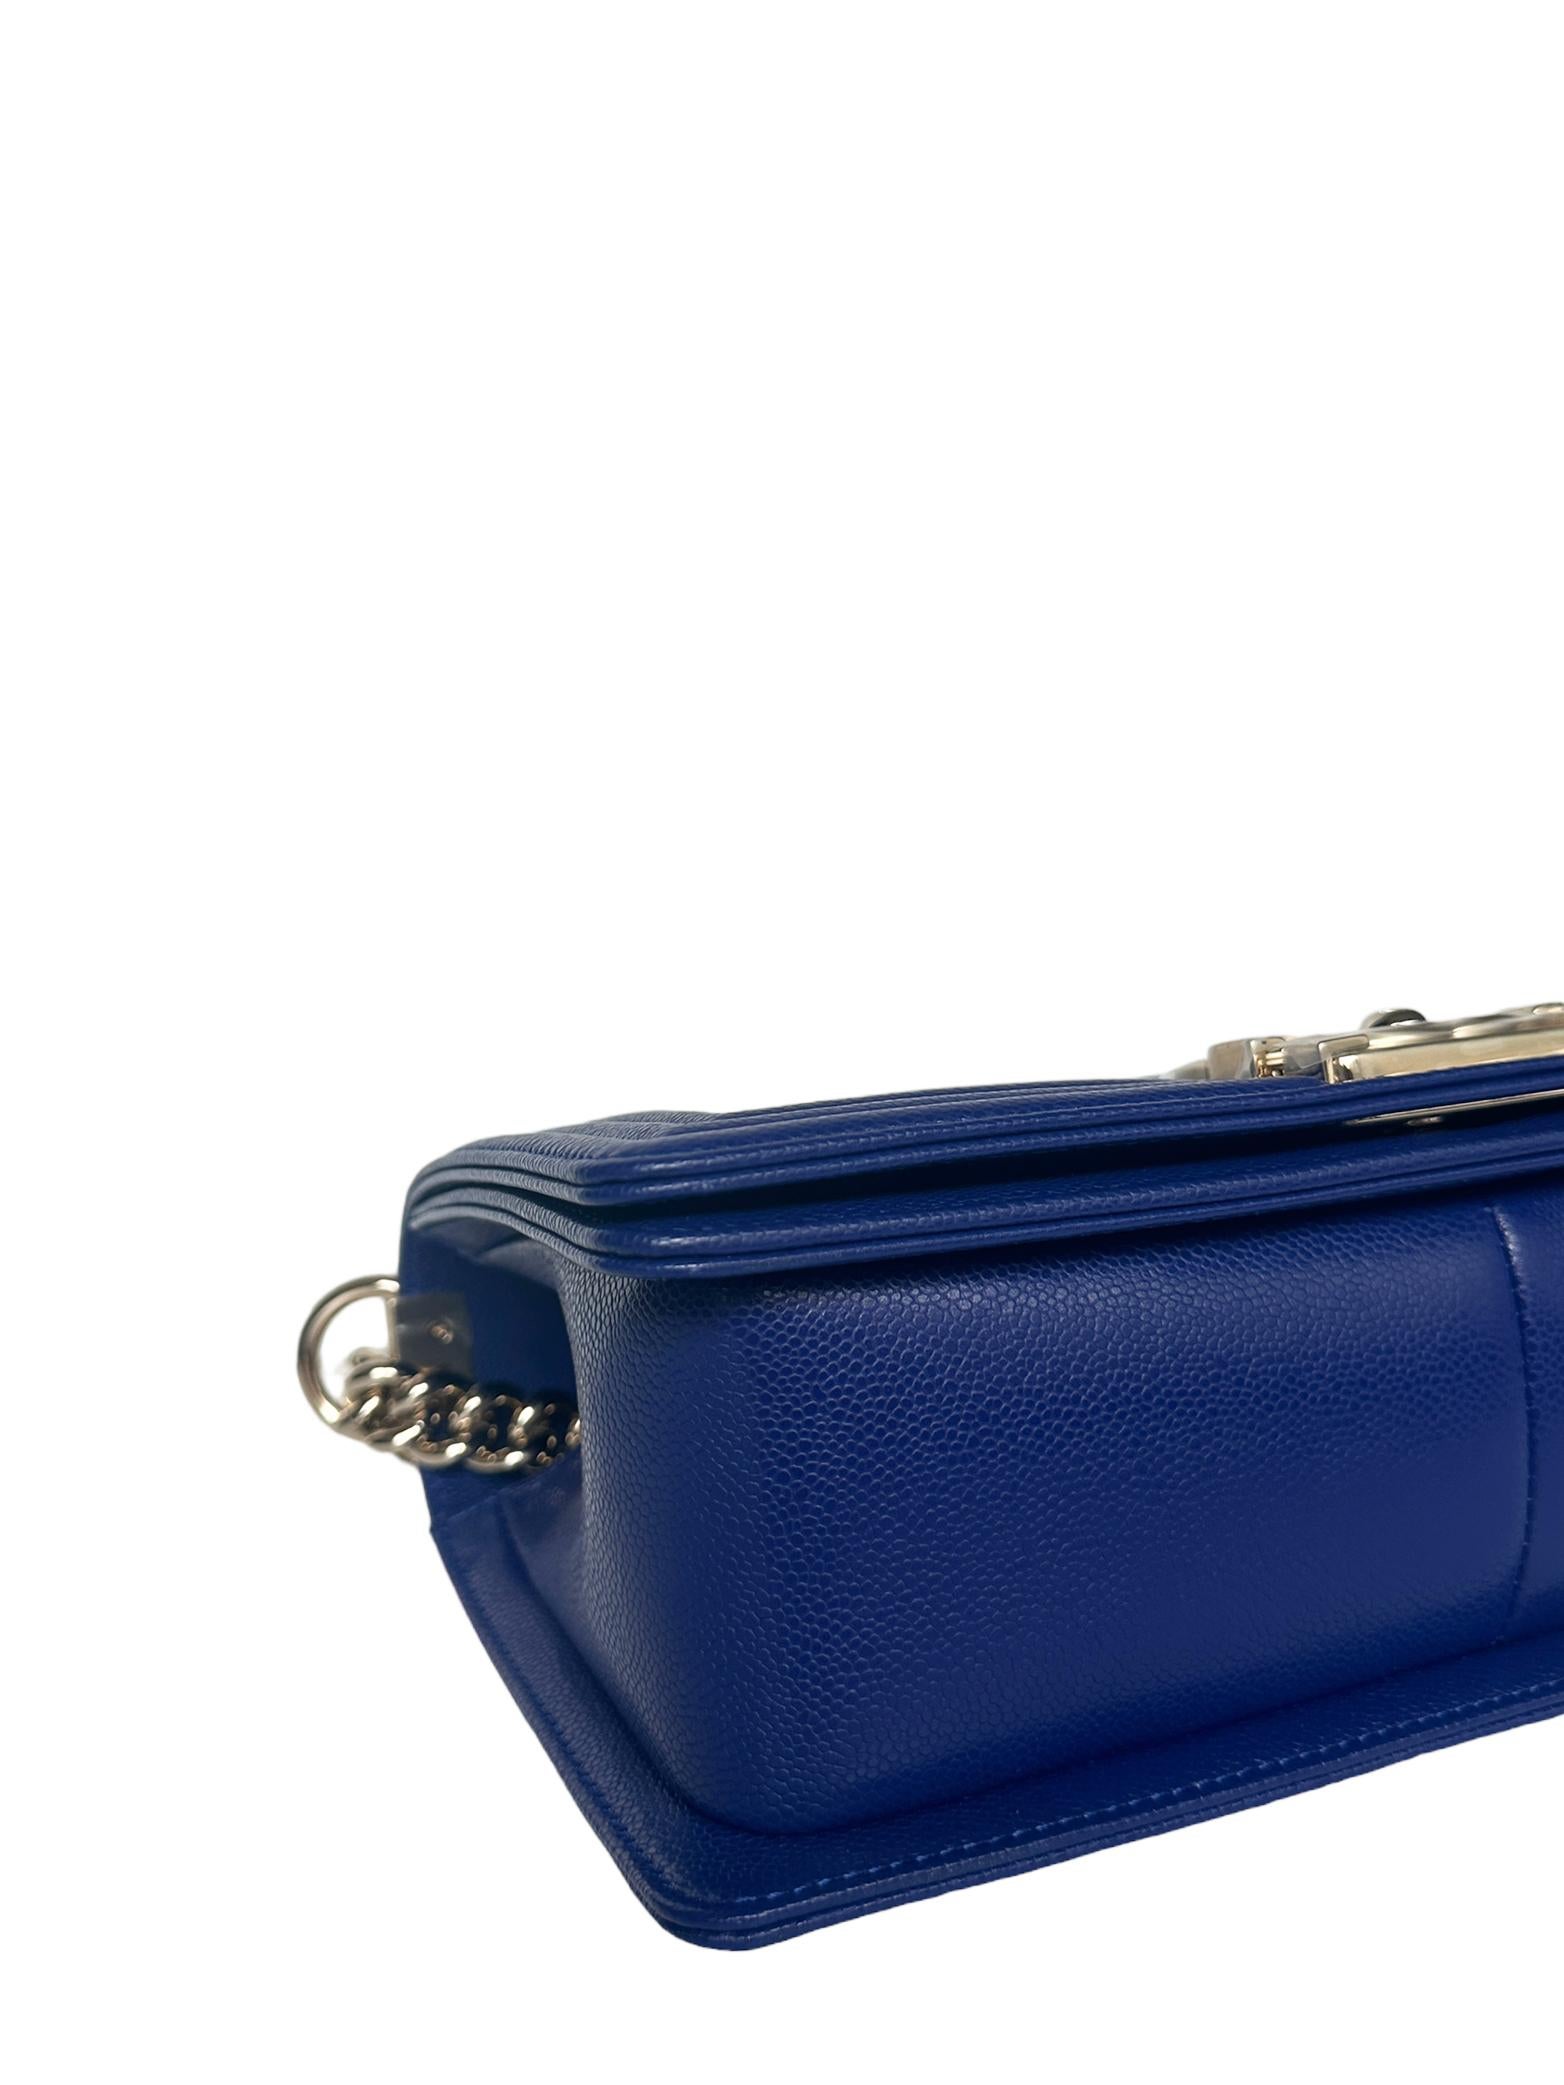 Chanel NEW Cobalt Blue Caviar Leather Quilted Medium Boy Bag 2